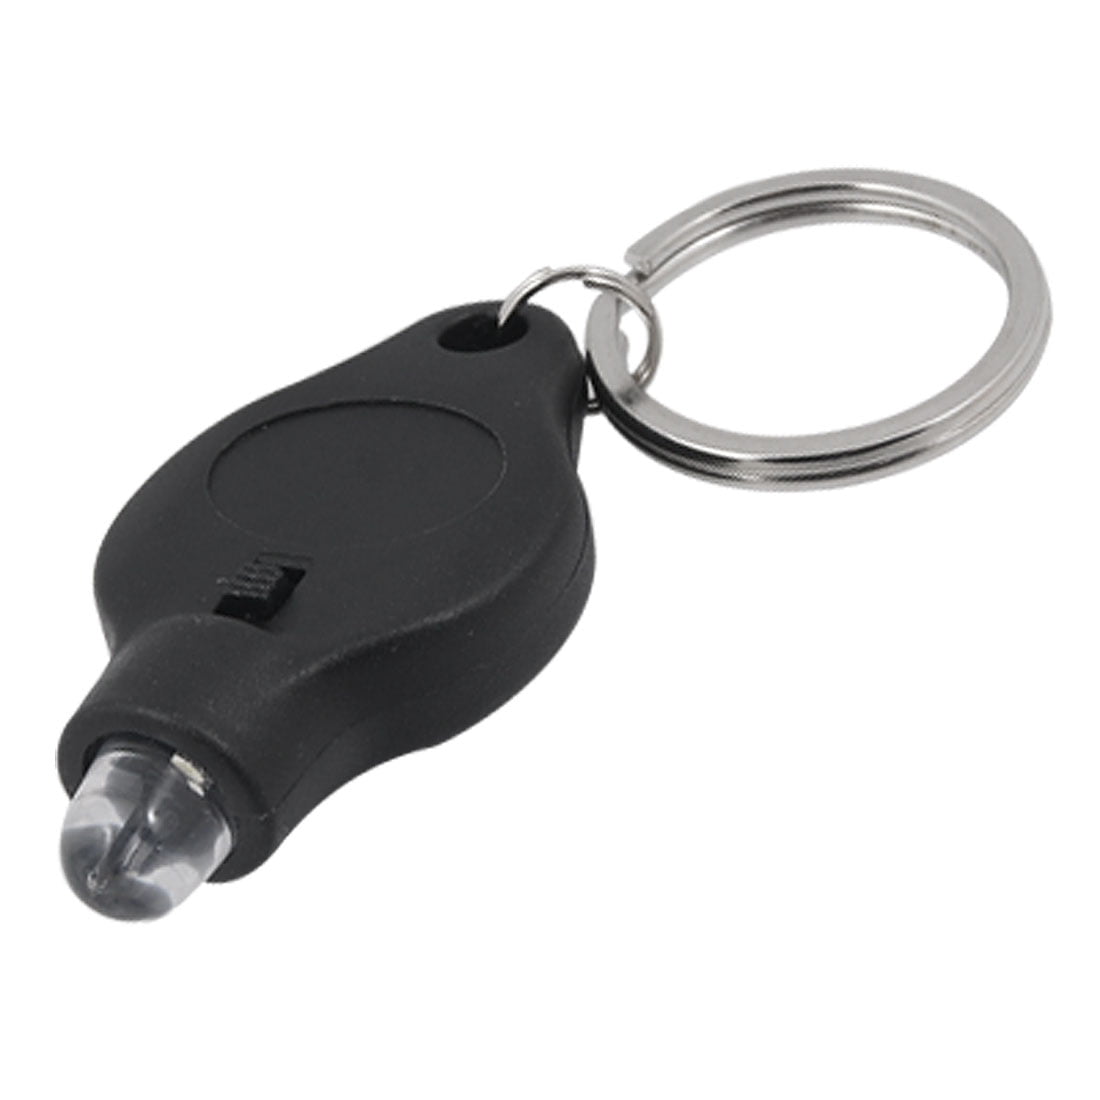 Super Slim LED Keyring Chain Torch 2 Pack black & silver upto 1000 hrs 